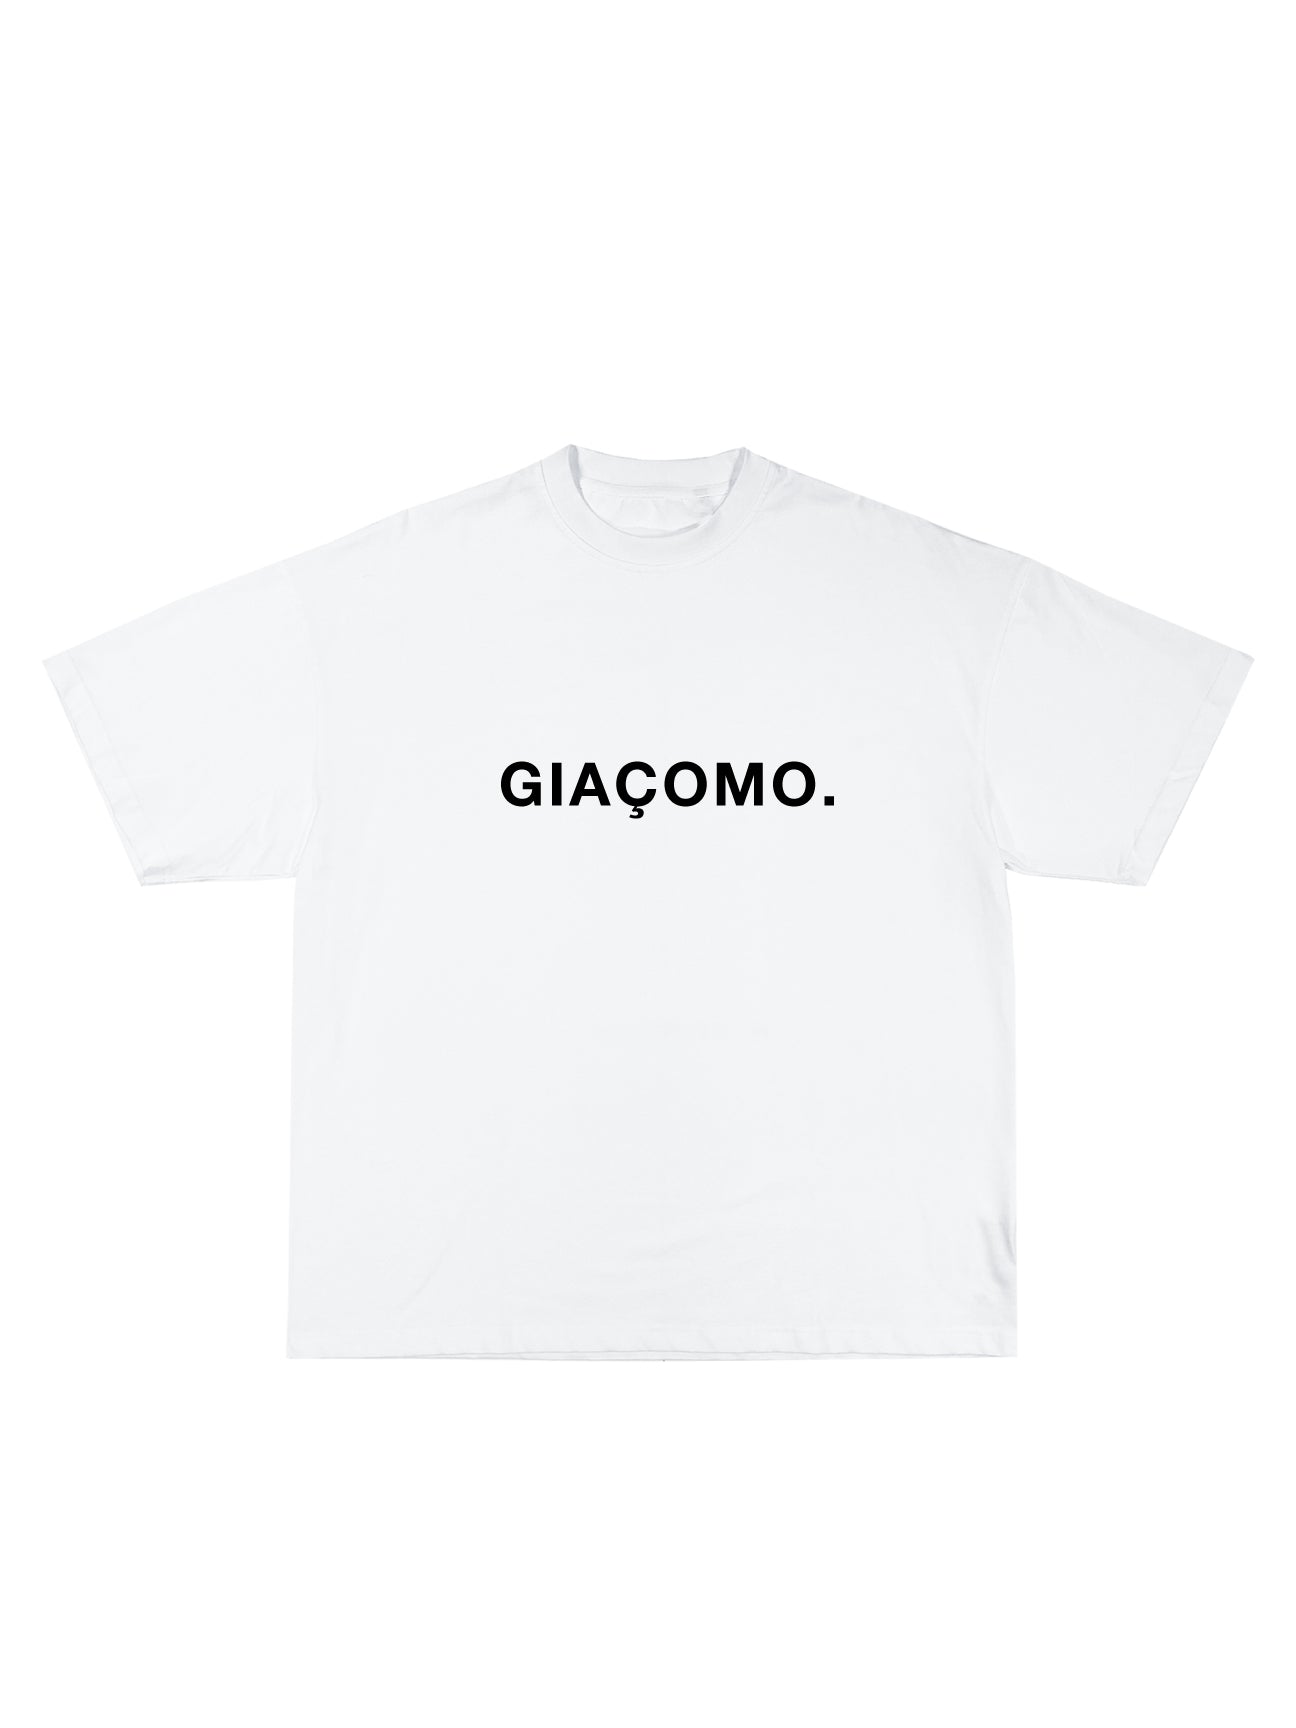 GIAÇOMO STATEMENT T-Shirt (3 colors)